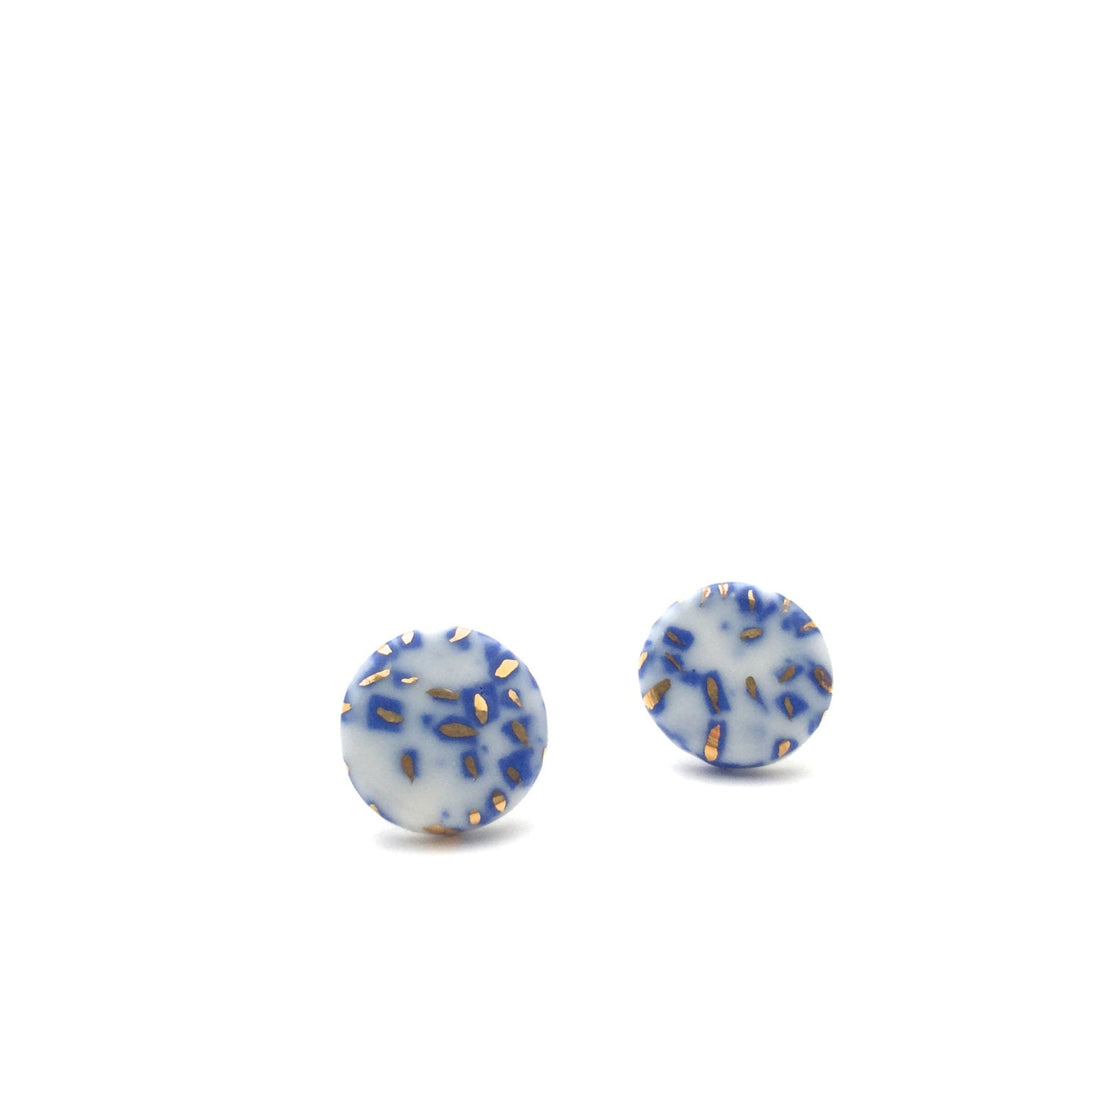 Blue Ceramic stud earrings, porcelain ceramic jewelry, minimalist post earring, blue and white stud, gift for her, geometric stud earrings